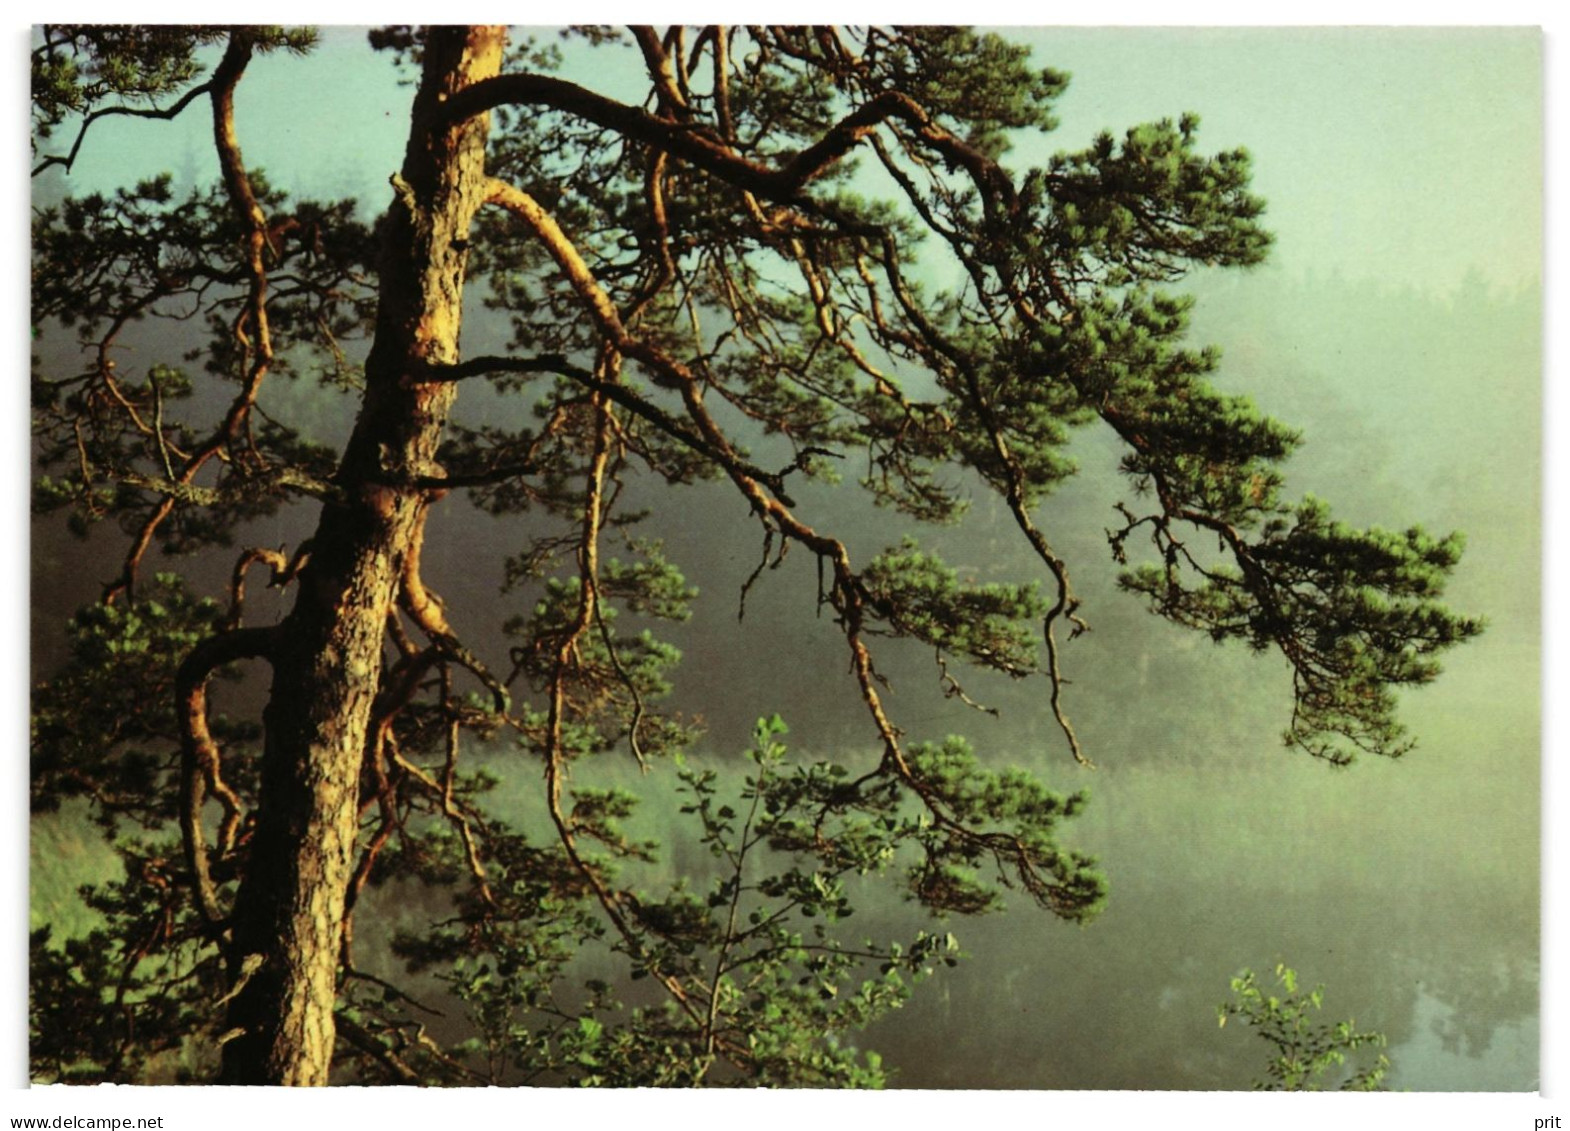 Pine Tree, Finland Finnish WWF Unused Postcard 1980s Publisher World Wide Fund For Nature, Serie Tunnelma 3, M.Rautkari - Rinoceronte